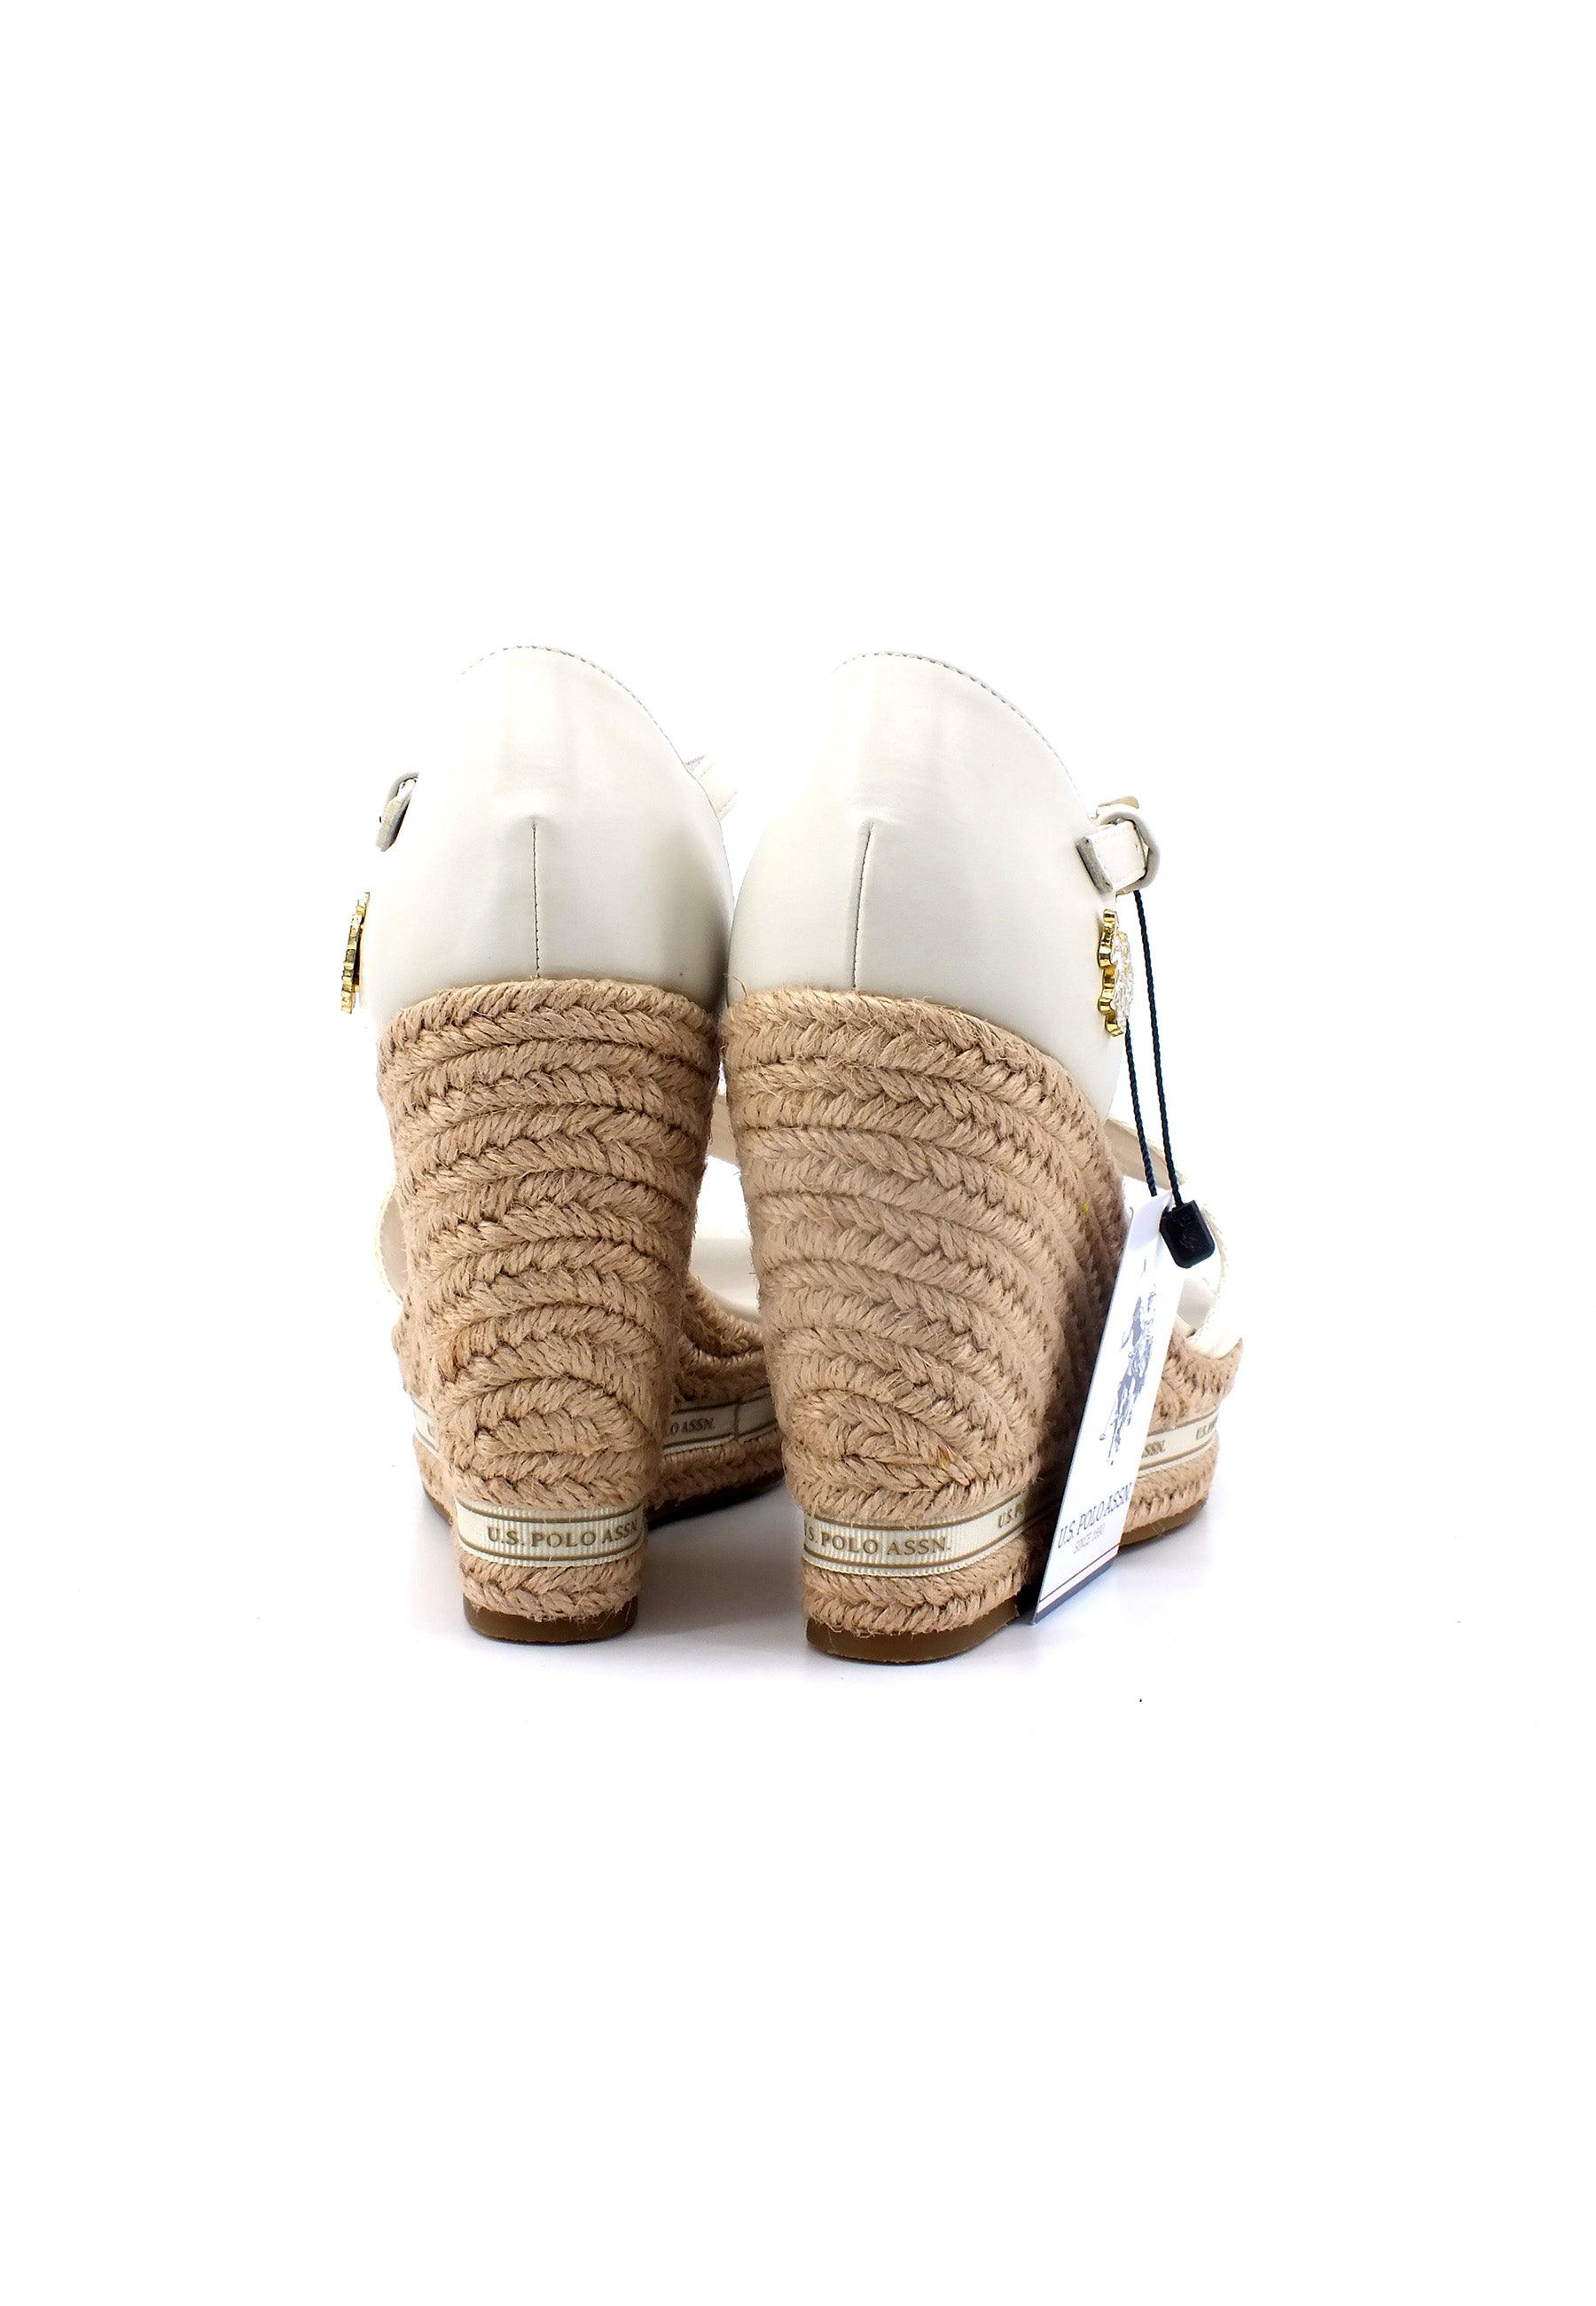 U.S. POLO ASSN. Sandalo Zeppa Donna Light Beige AYLIN009 - Sandrini Calzature e Abbigliamento